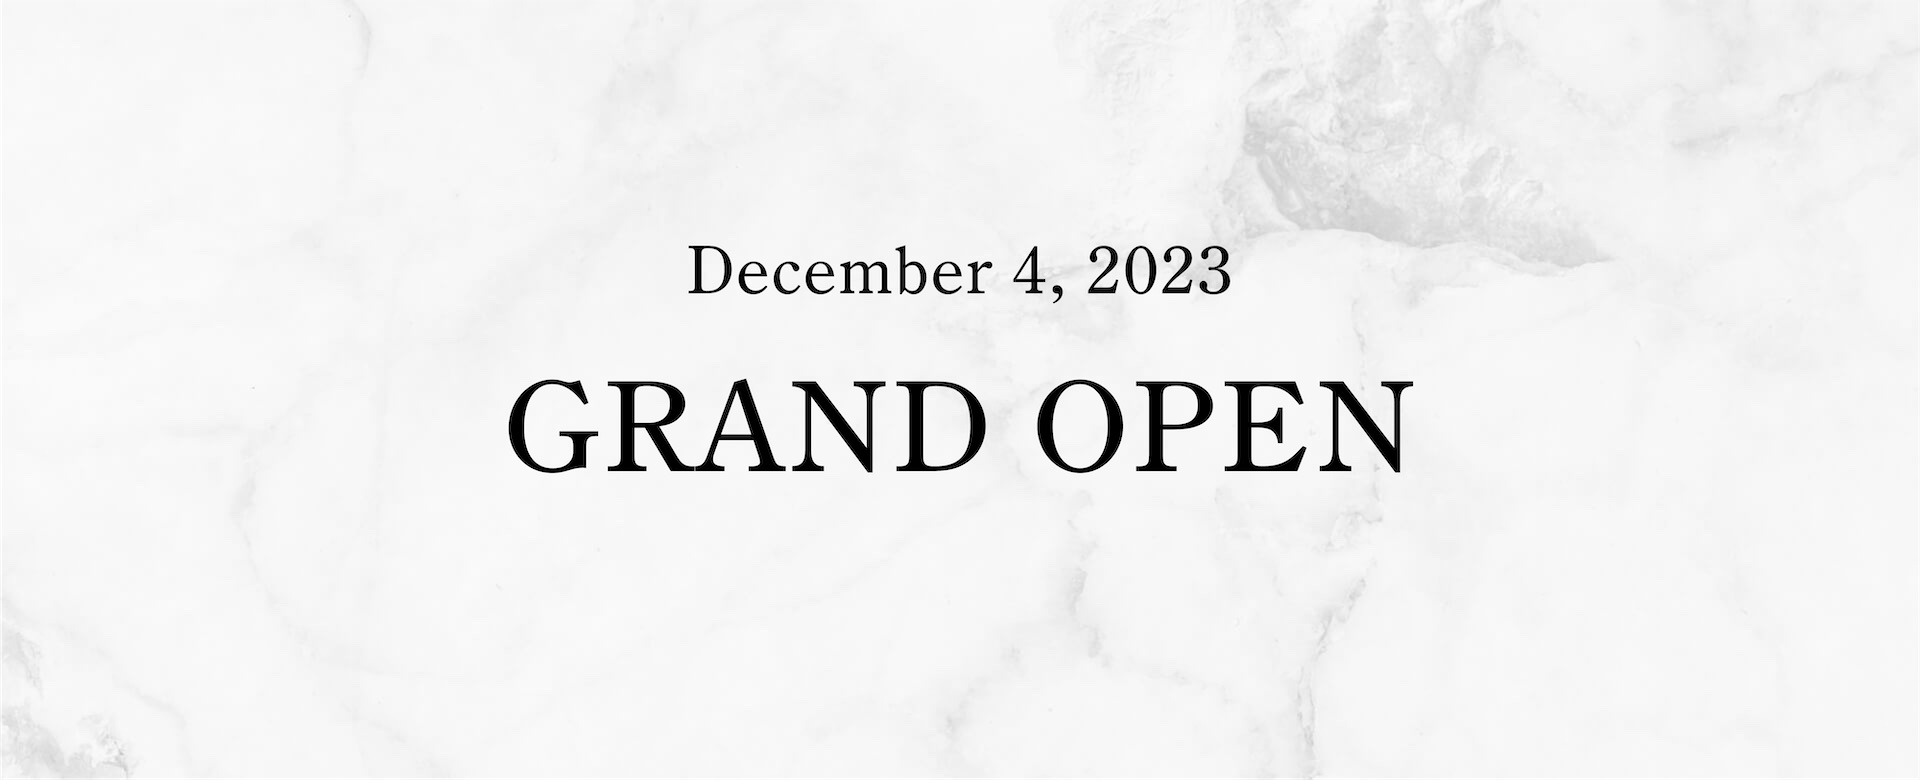 Dcember 4,2023 GRAND OPEN